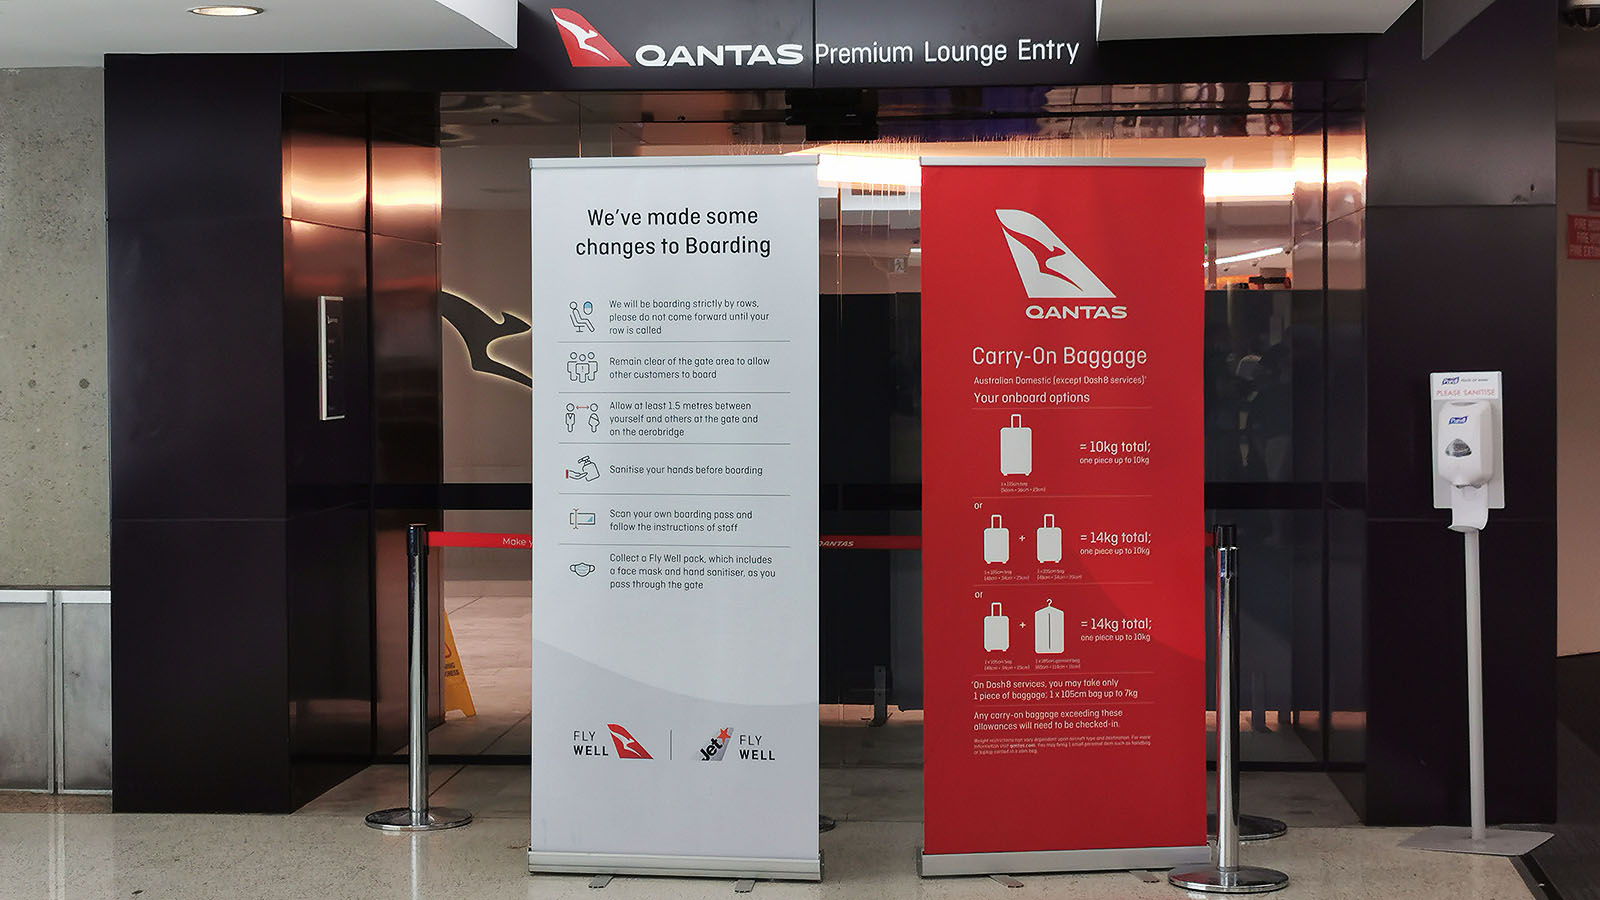 Qantas Economy